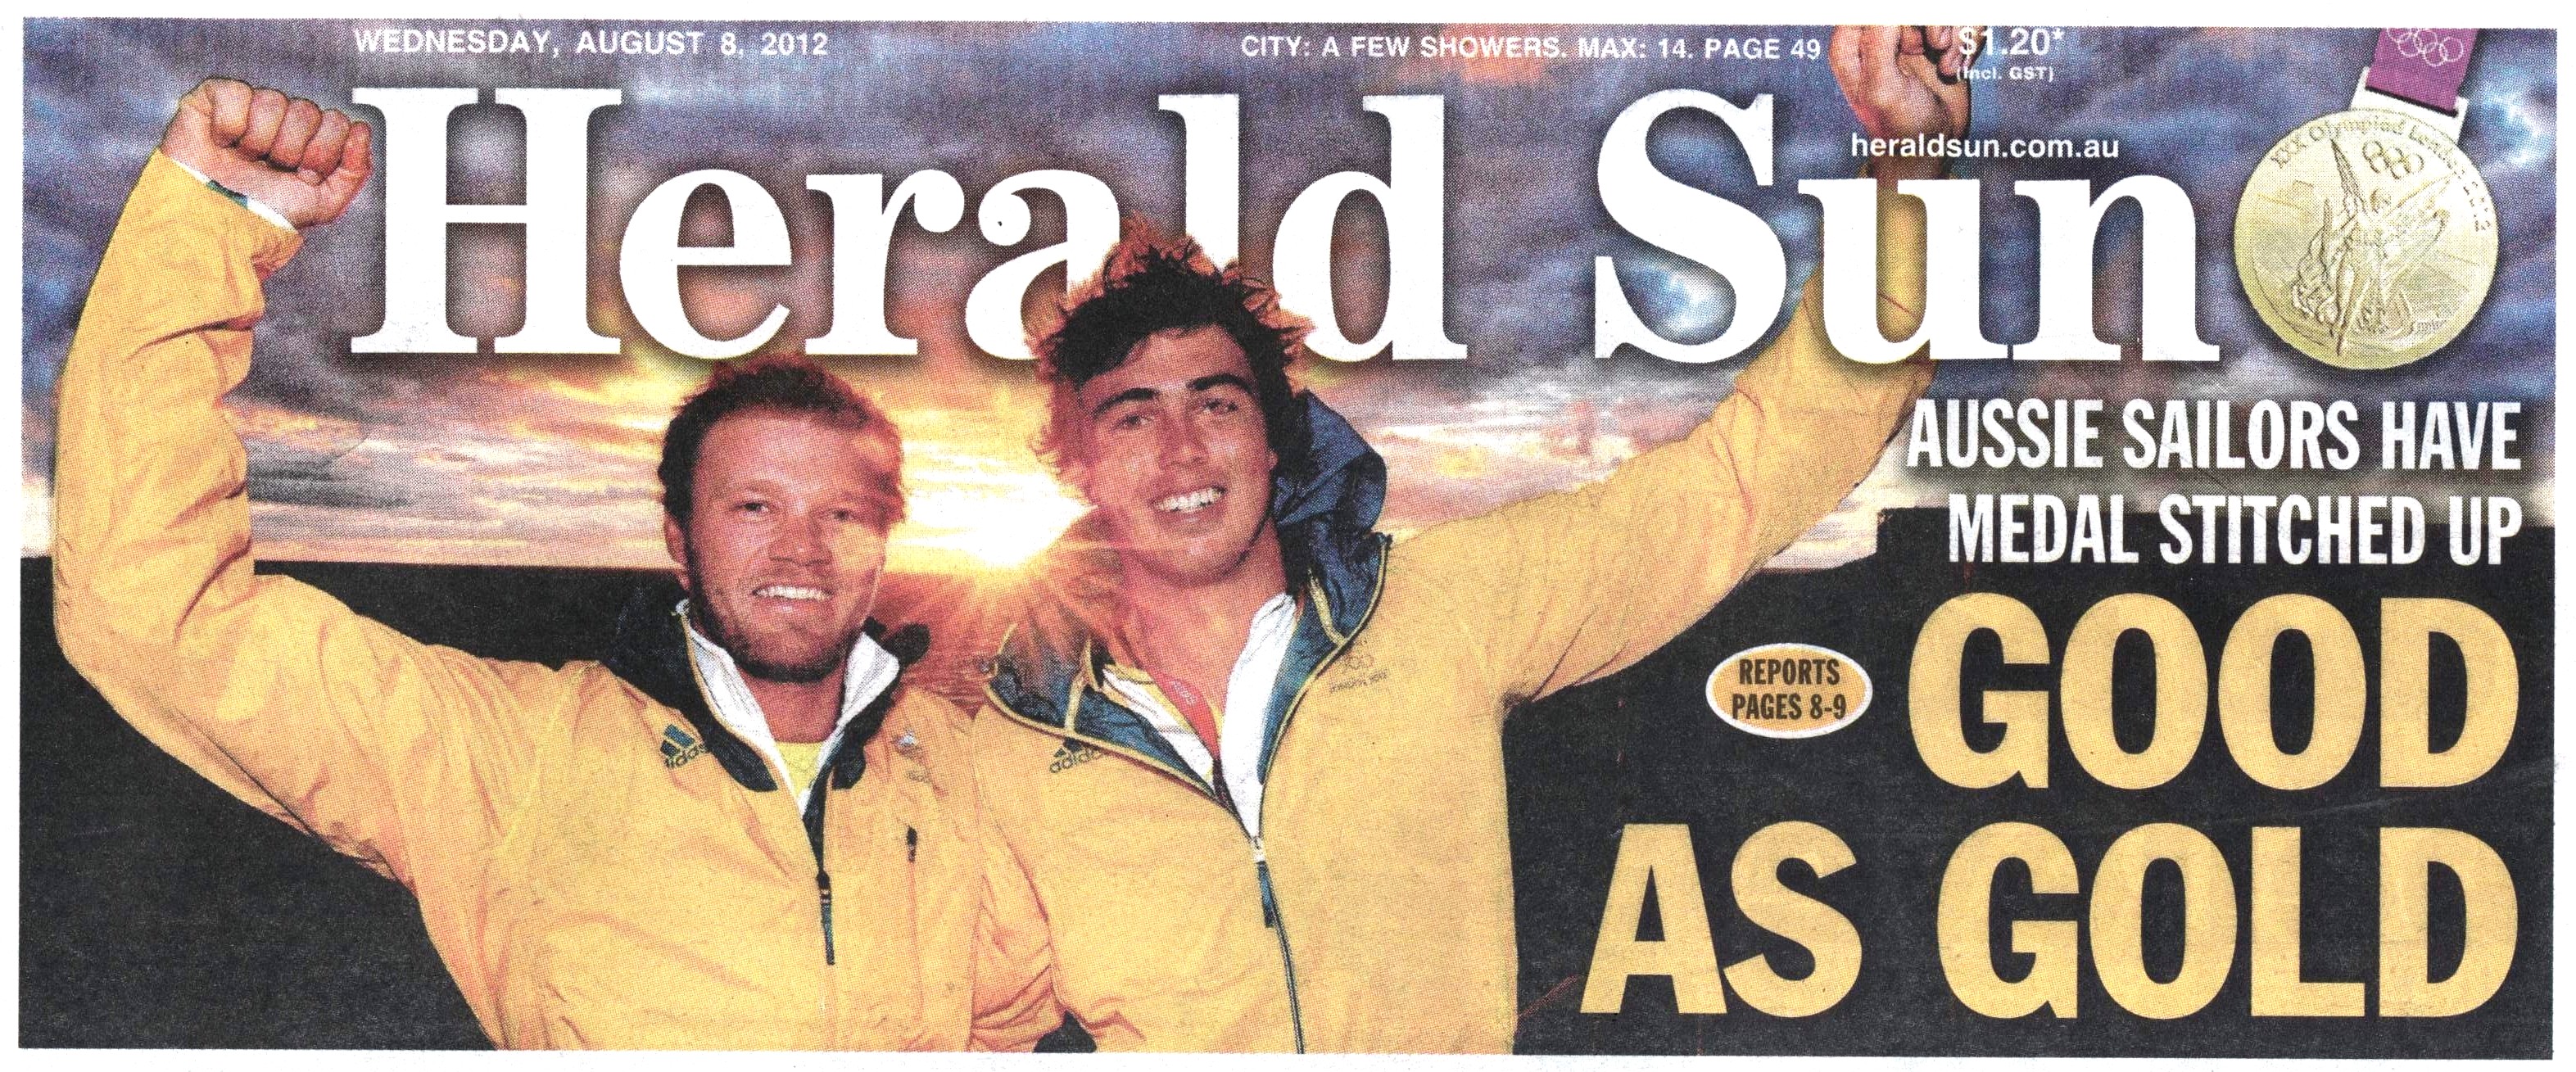 Nathan Outteridge Iain Jensen Australian winners gold medal 49er skiff race 2012 London Olympics sailors Herald Sun newspaper